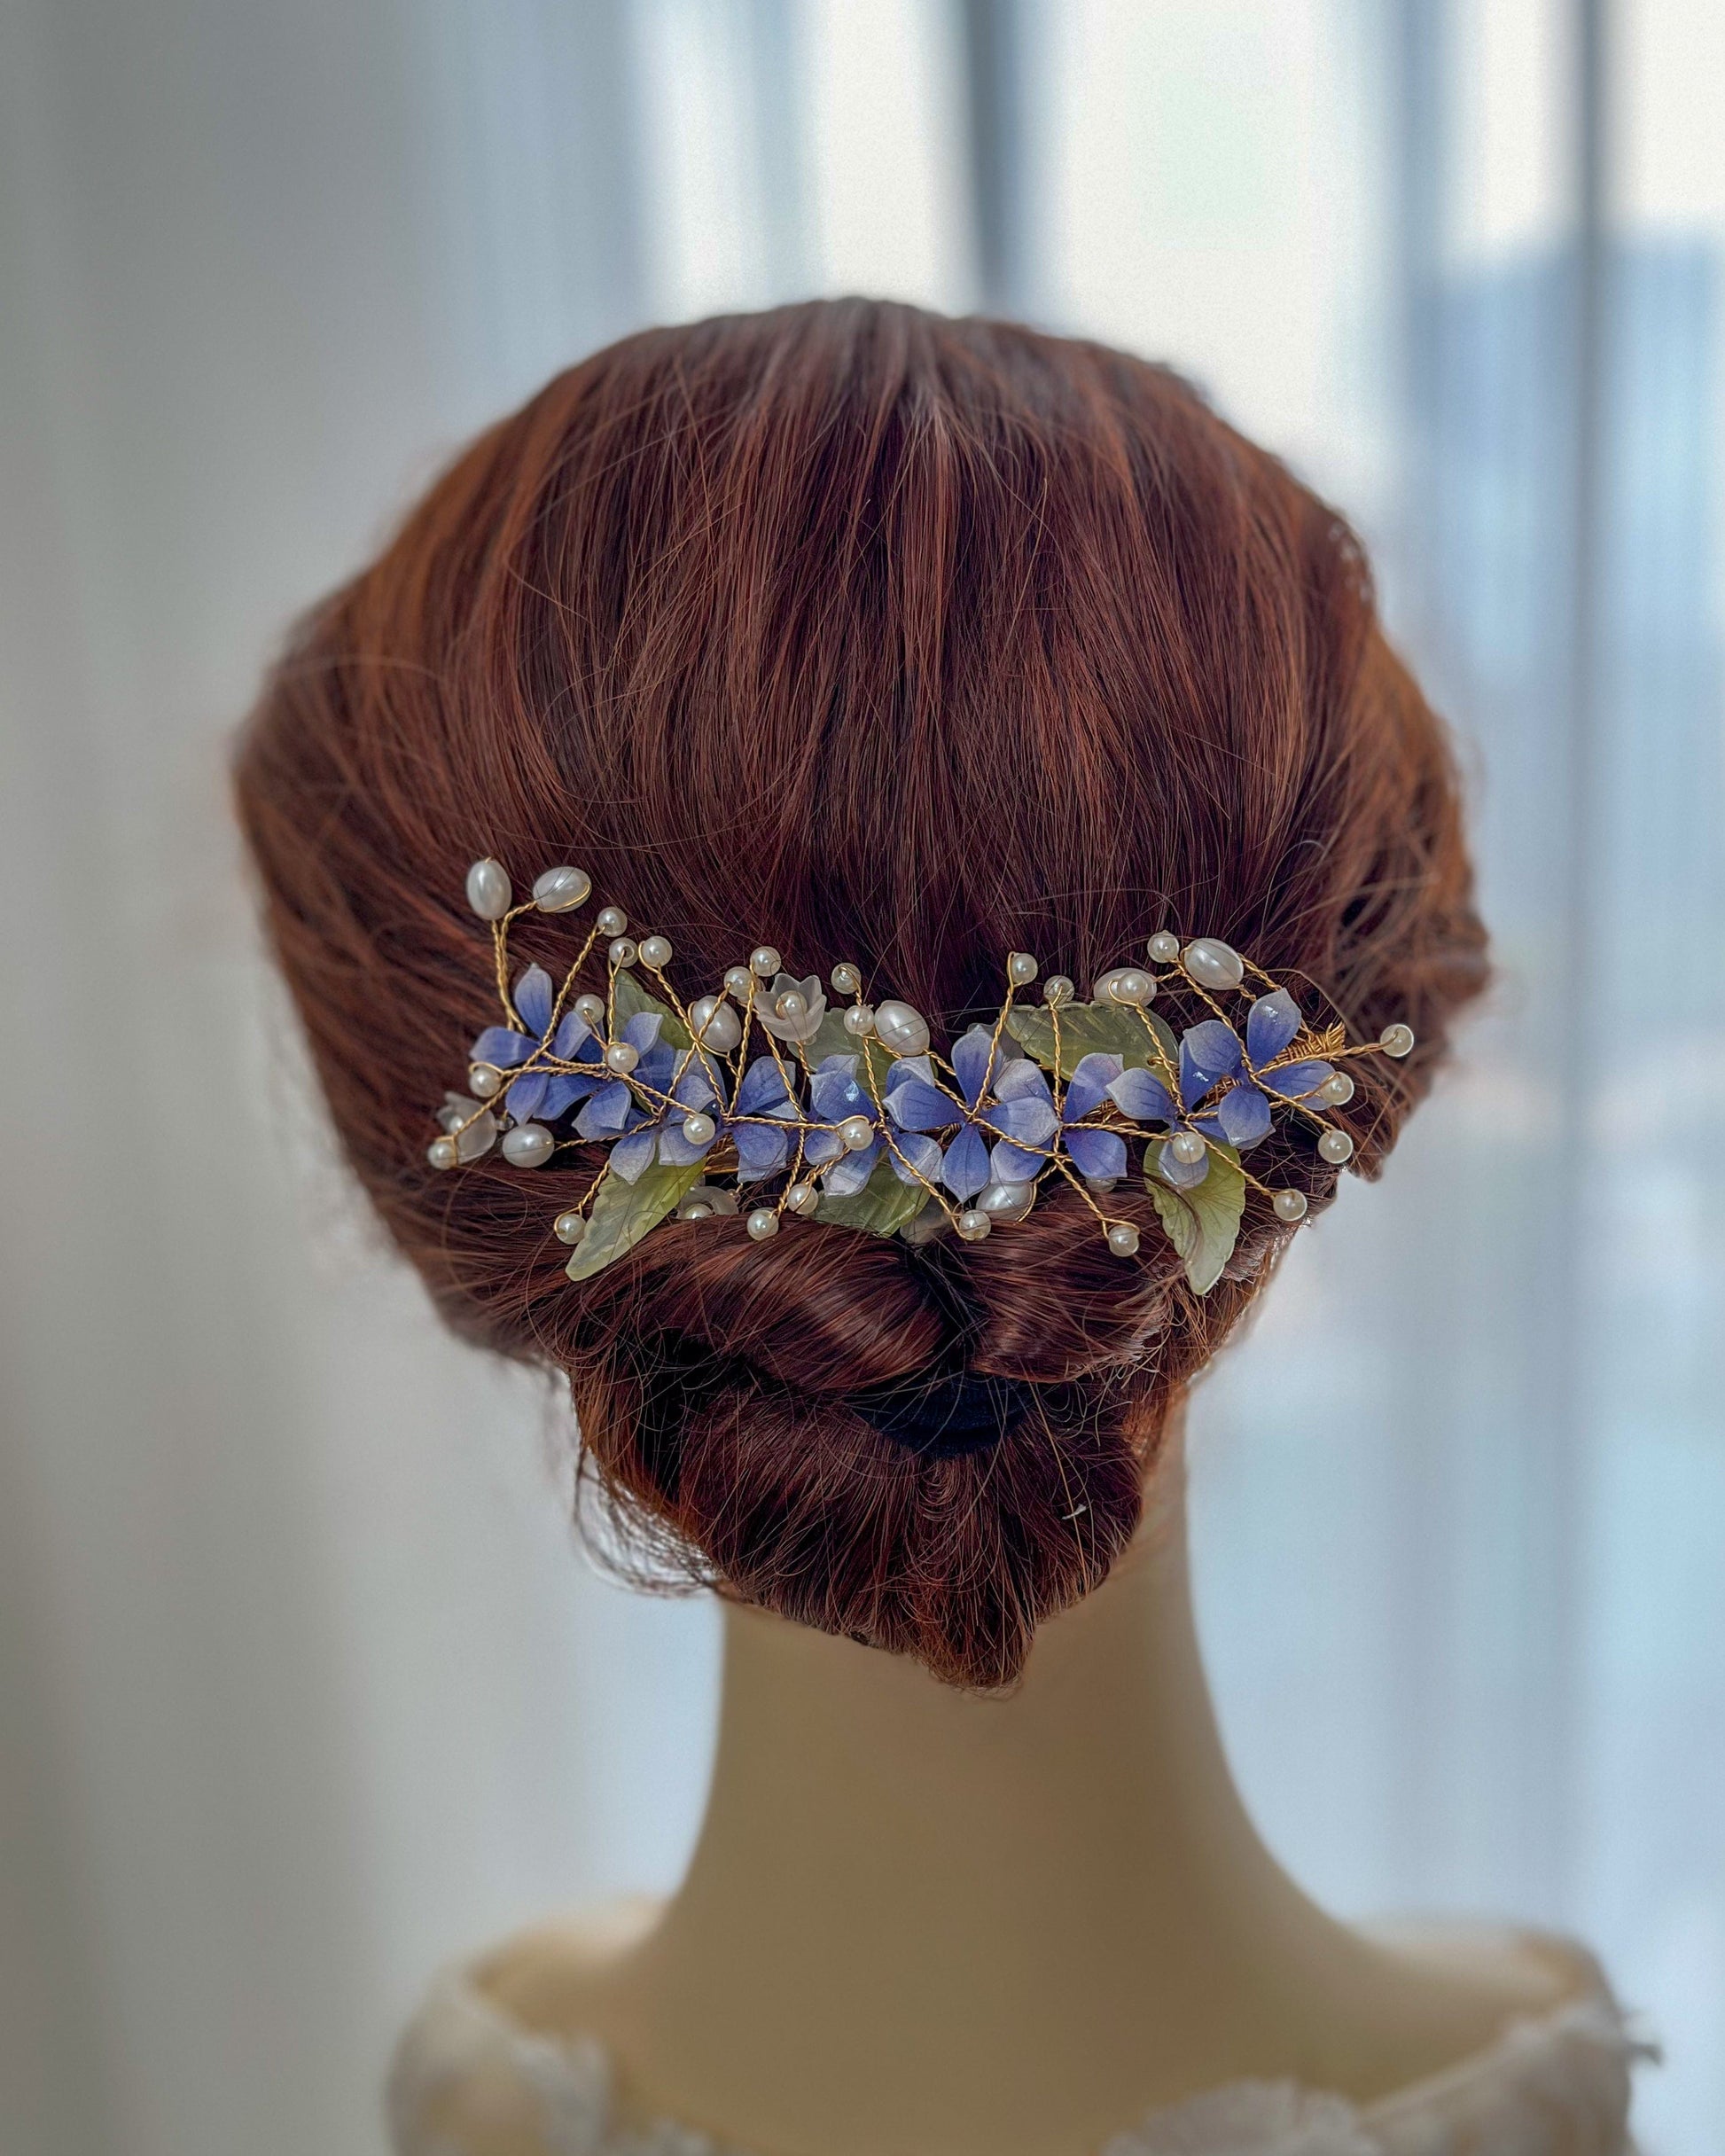 Bieauli Jewellery London hair accessories Handmade ceramic crystal comb, wedding tiara, bridesmaid gift, send best friend 的